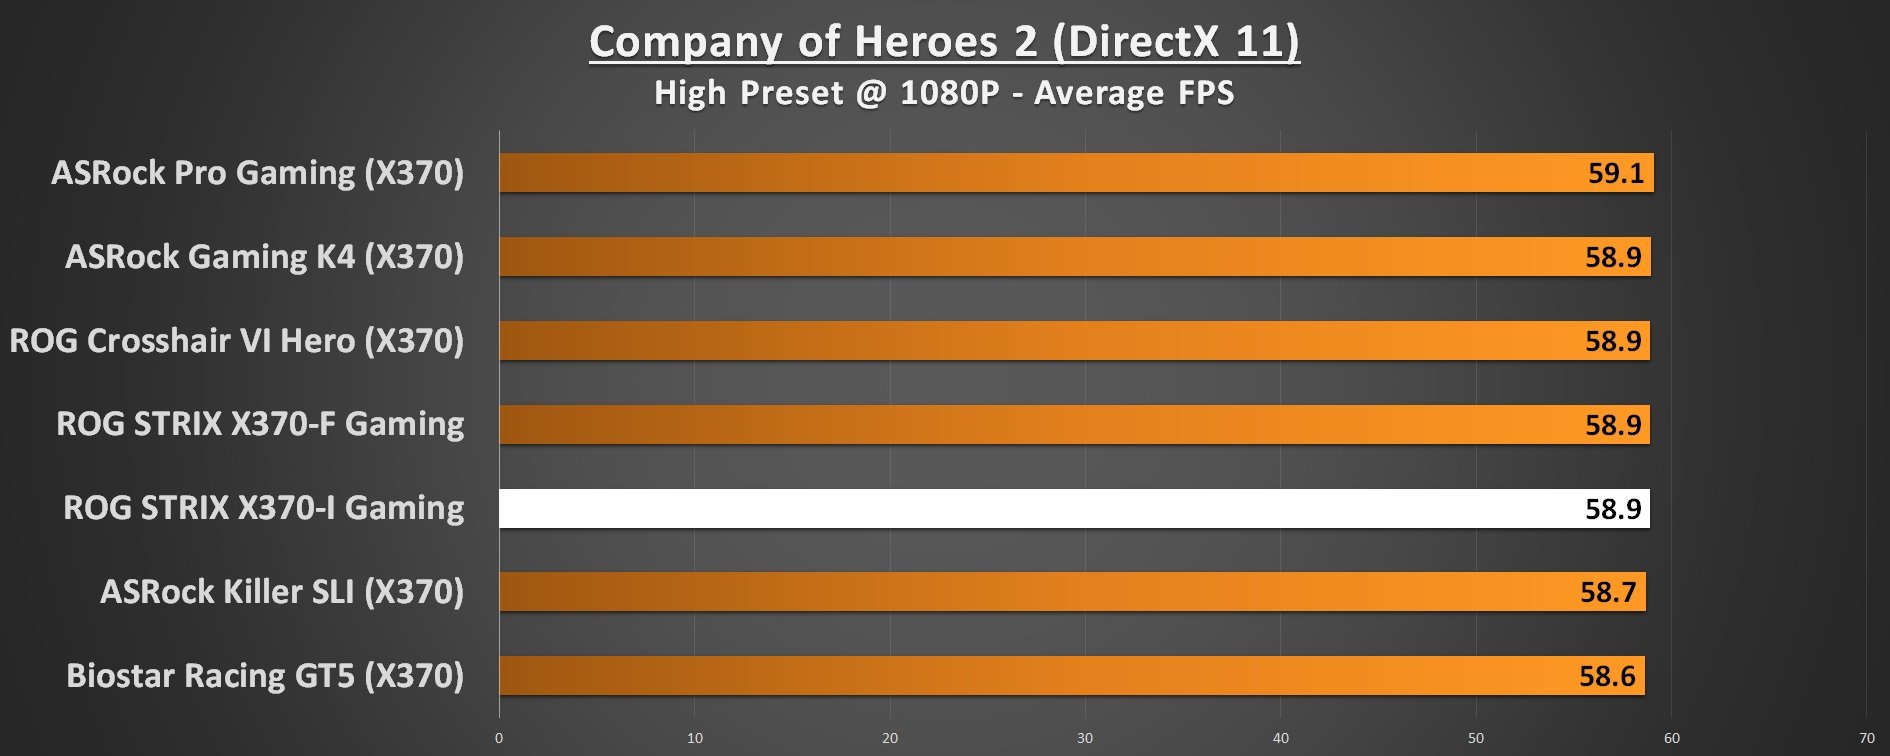 ASUS ROG STRIX X370-I Performance Company of Heroes 2 1080p DirectX 11